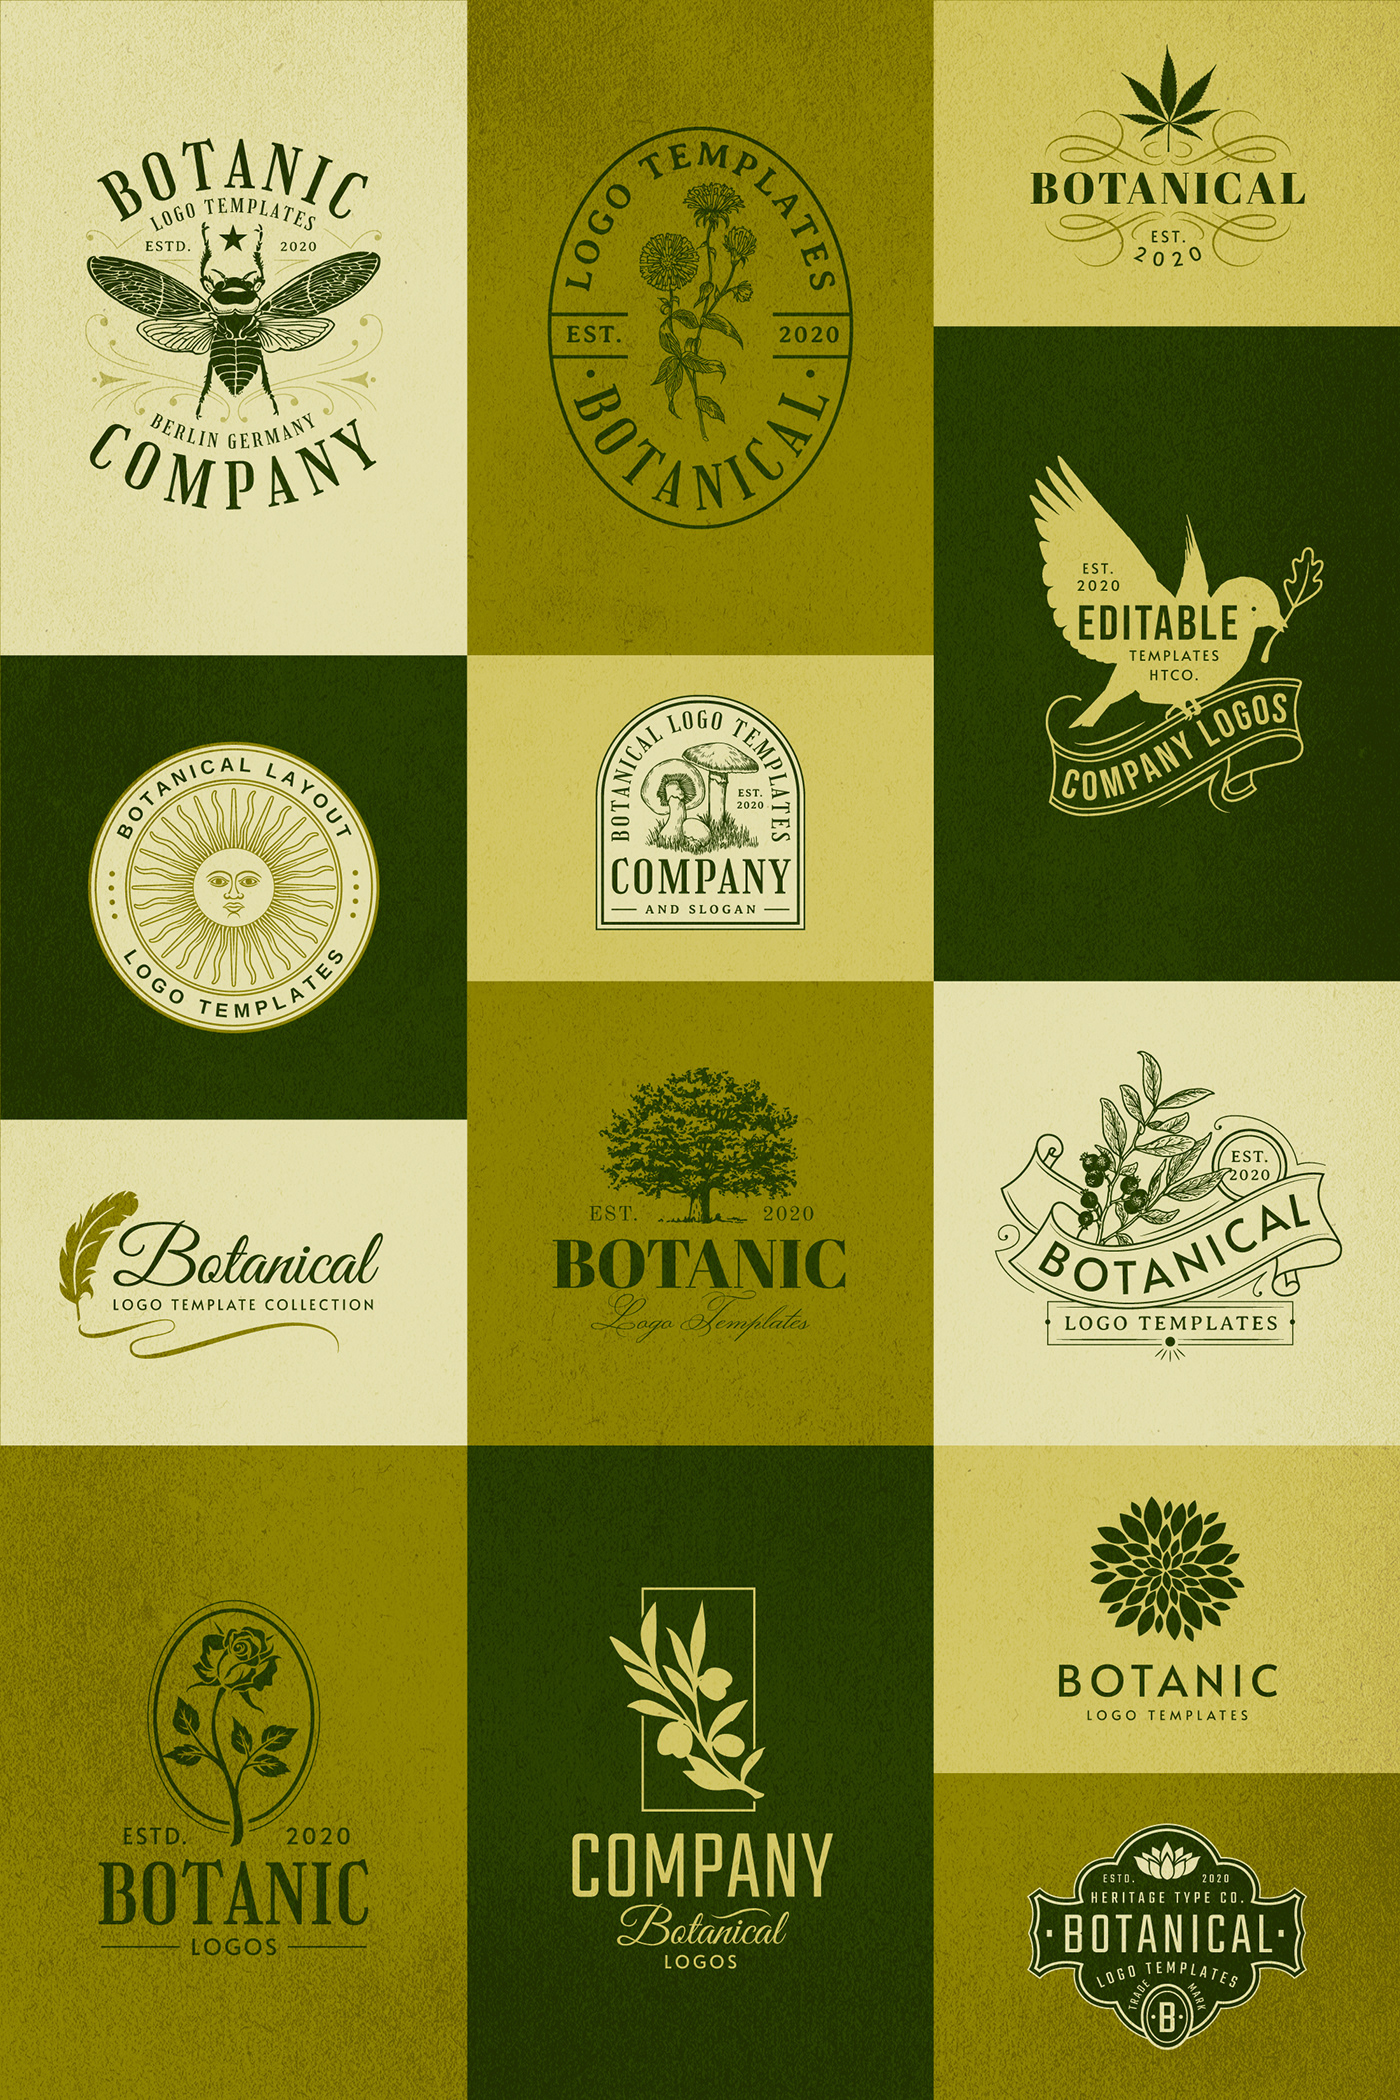 A collection of botanic logo templates